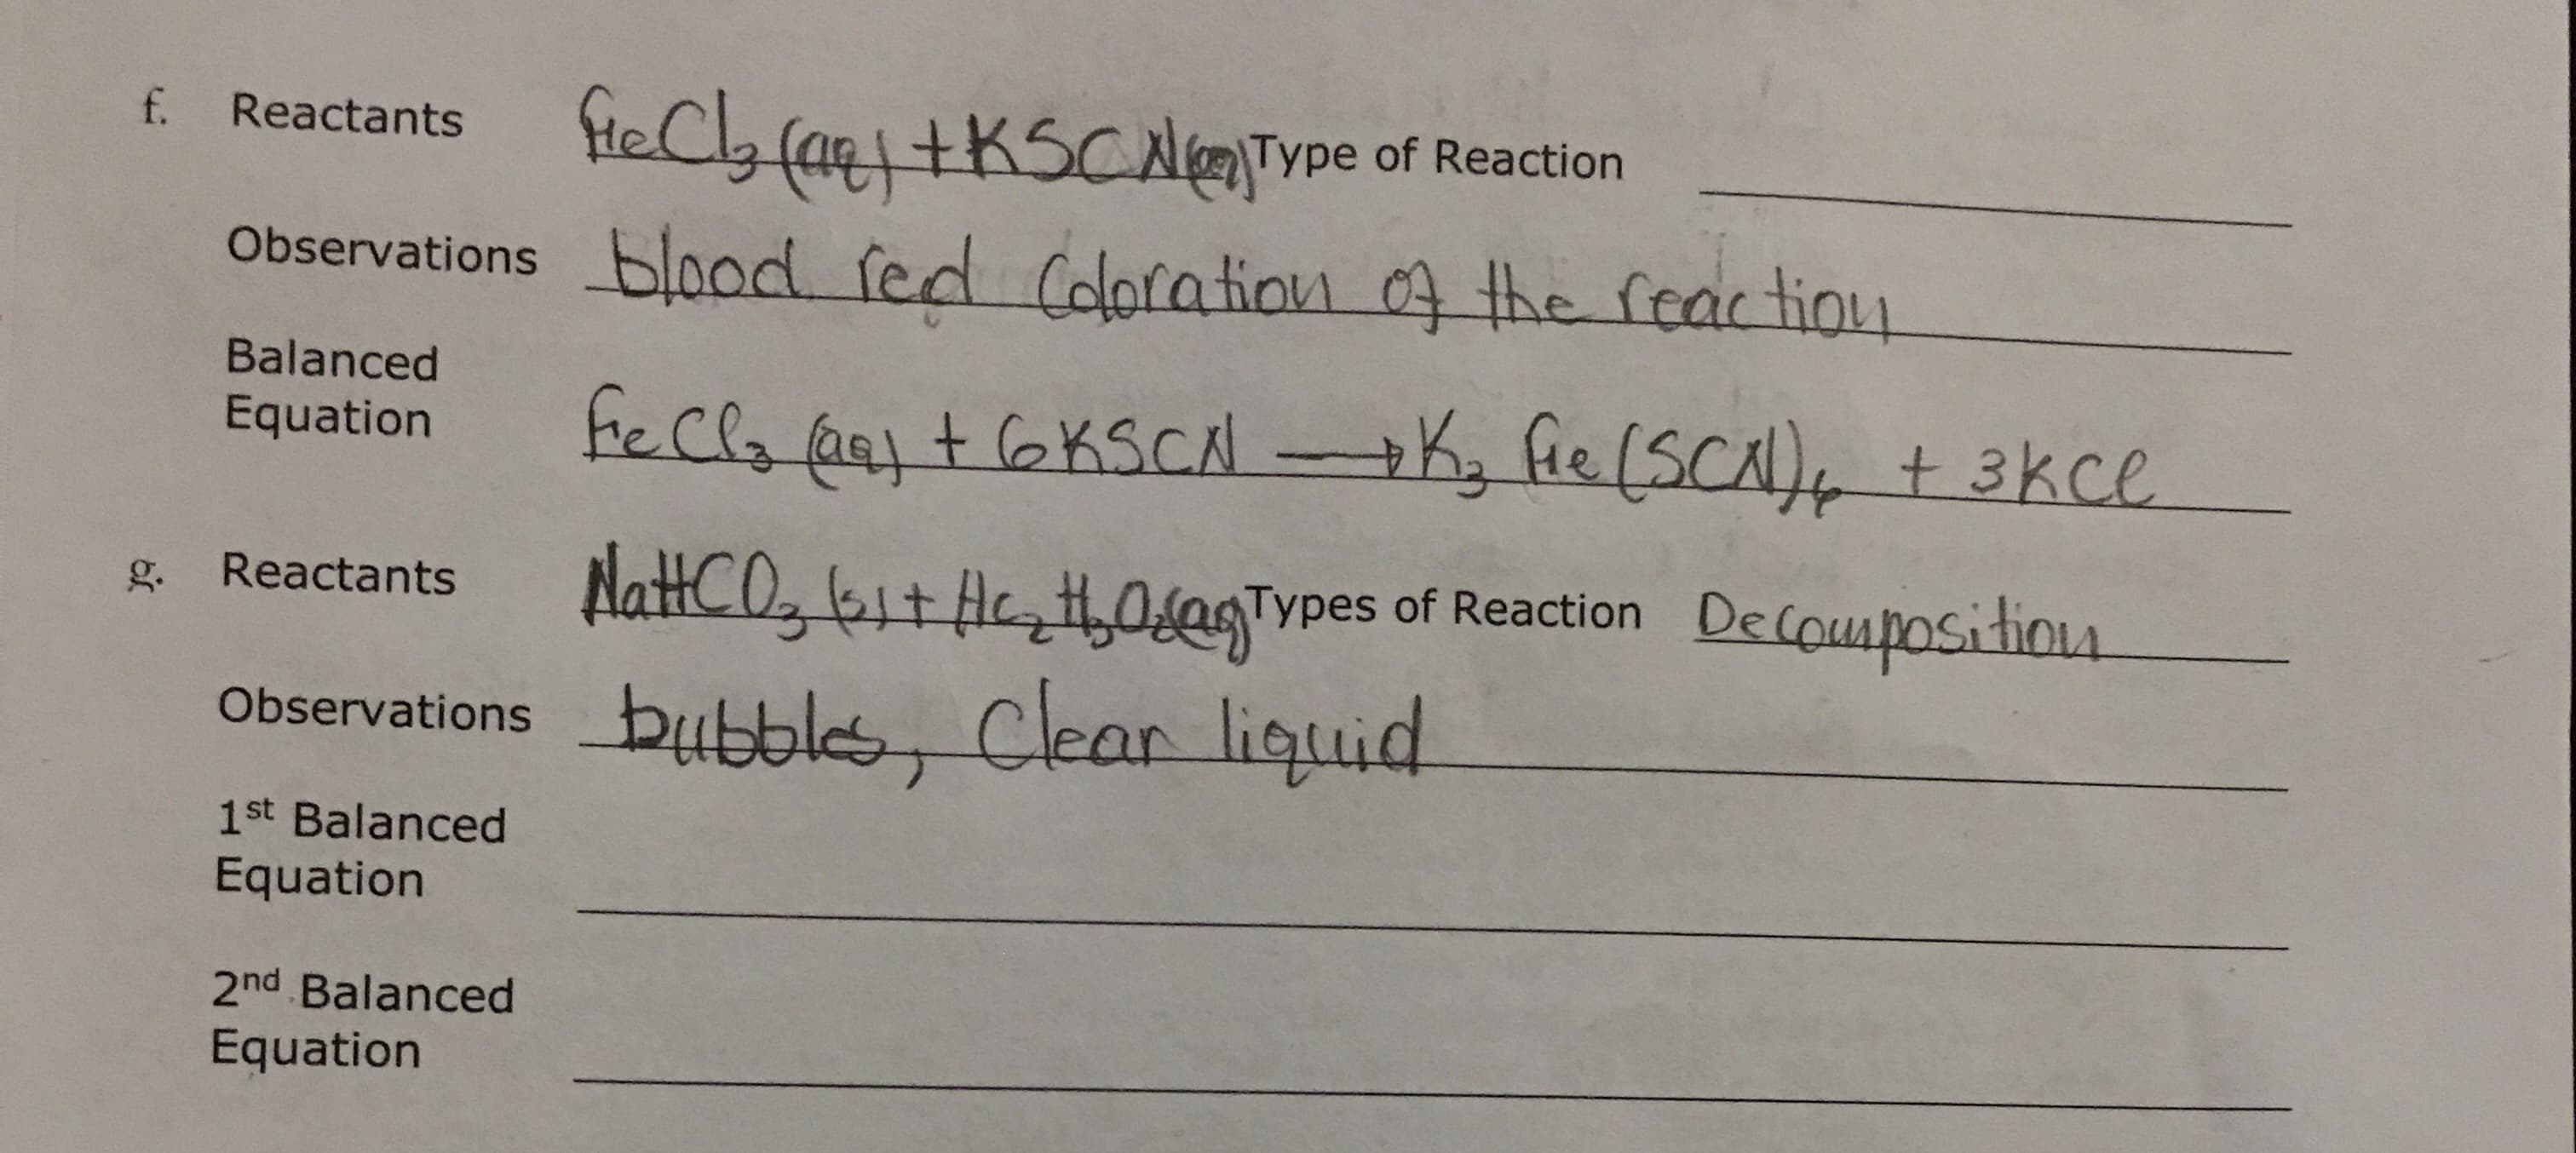 HeCly (aqitKSCNTYpe of Reaction
Observations blaod fed (dotation the feac tiou
f. Reactants
Balanced
fecl fany t laksCA
e(SCA), + 3kce
Equation
NattCO bit fe t,0saTvpes of Reaction Decoupositiou
Reactants
g.
Observations butbles Clear liquid
1st Balanced
Equation
2nd Balanced
Equation
